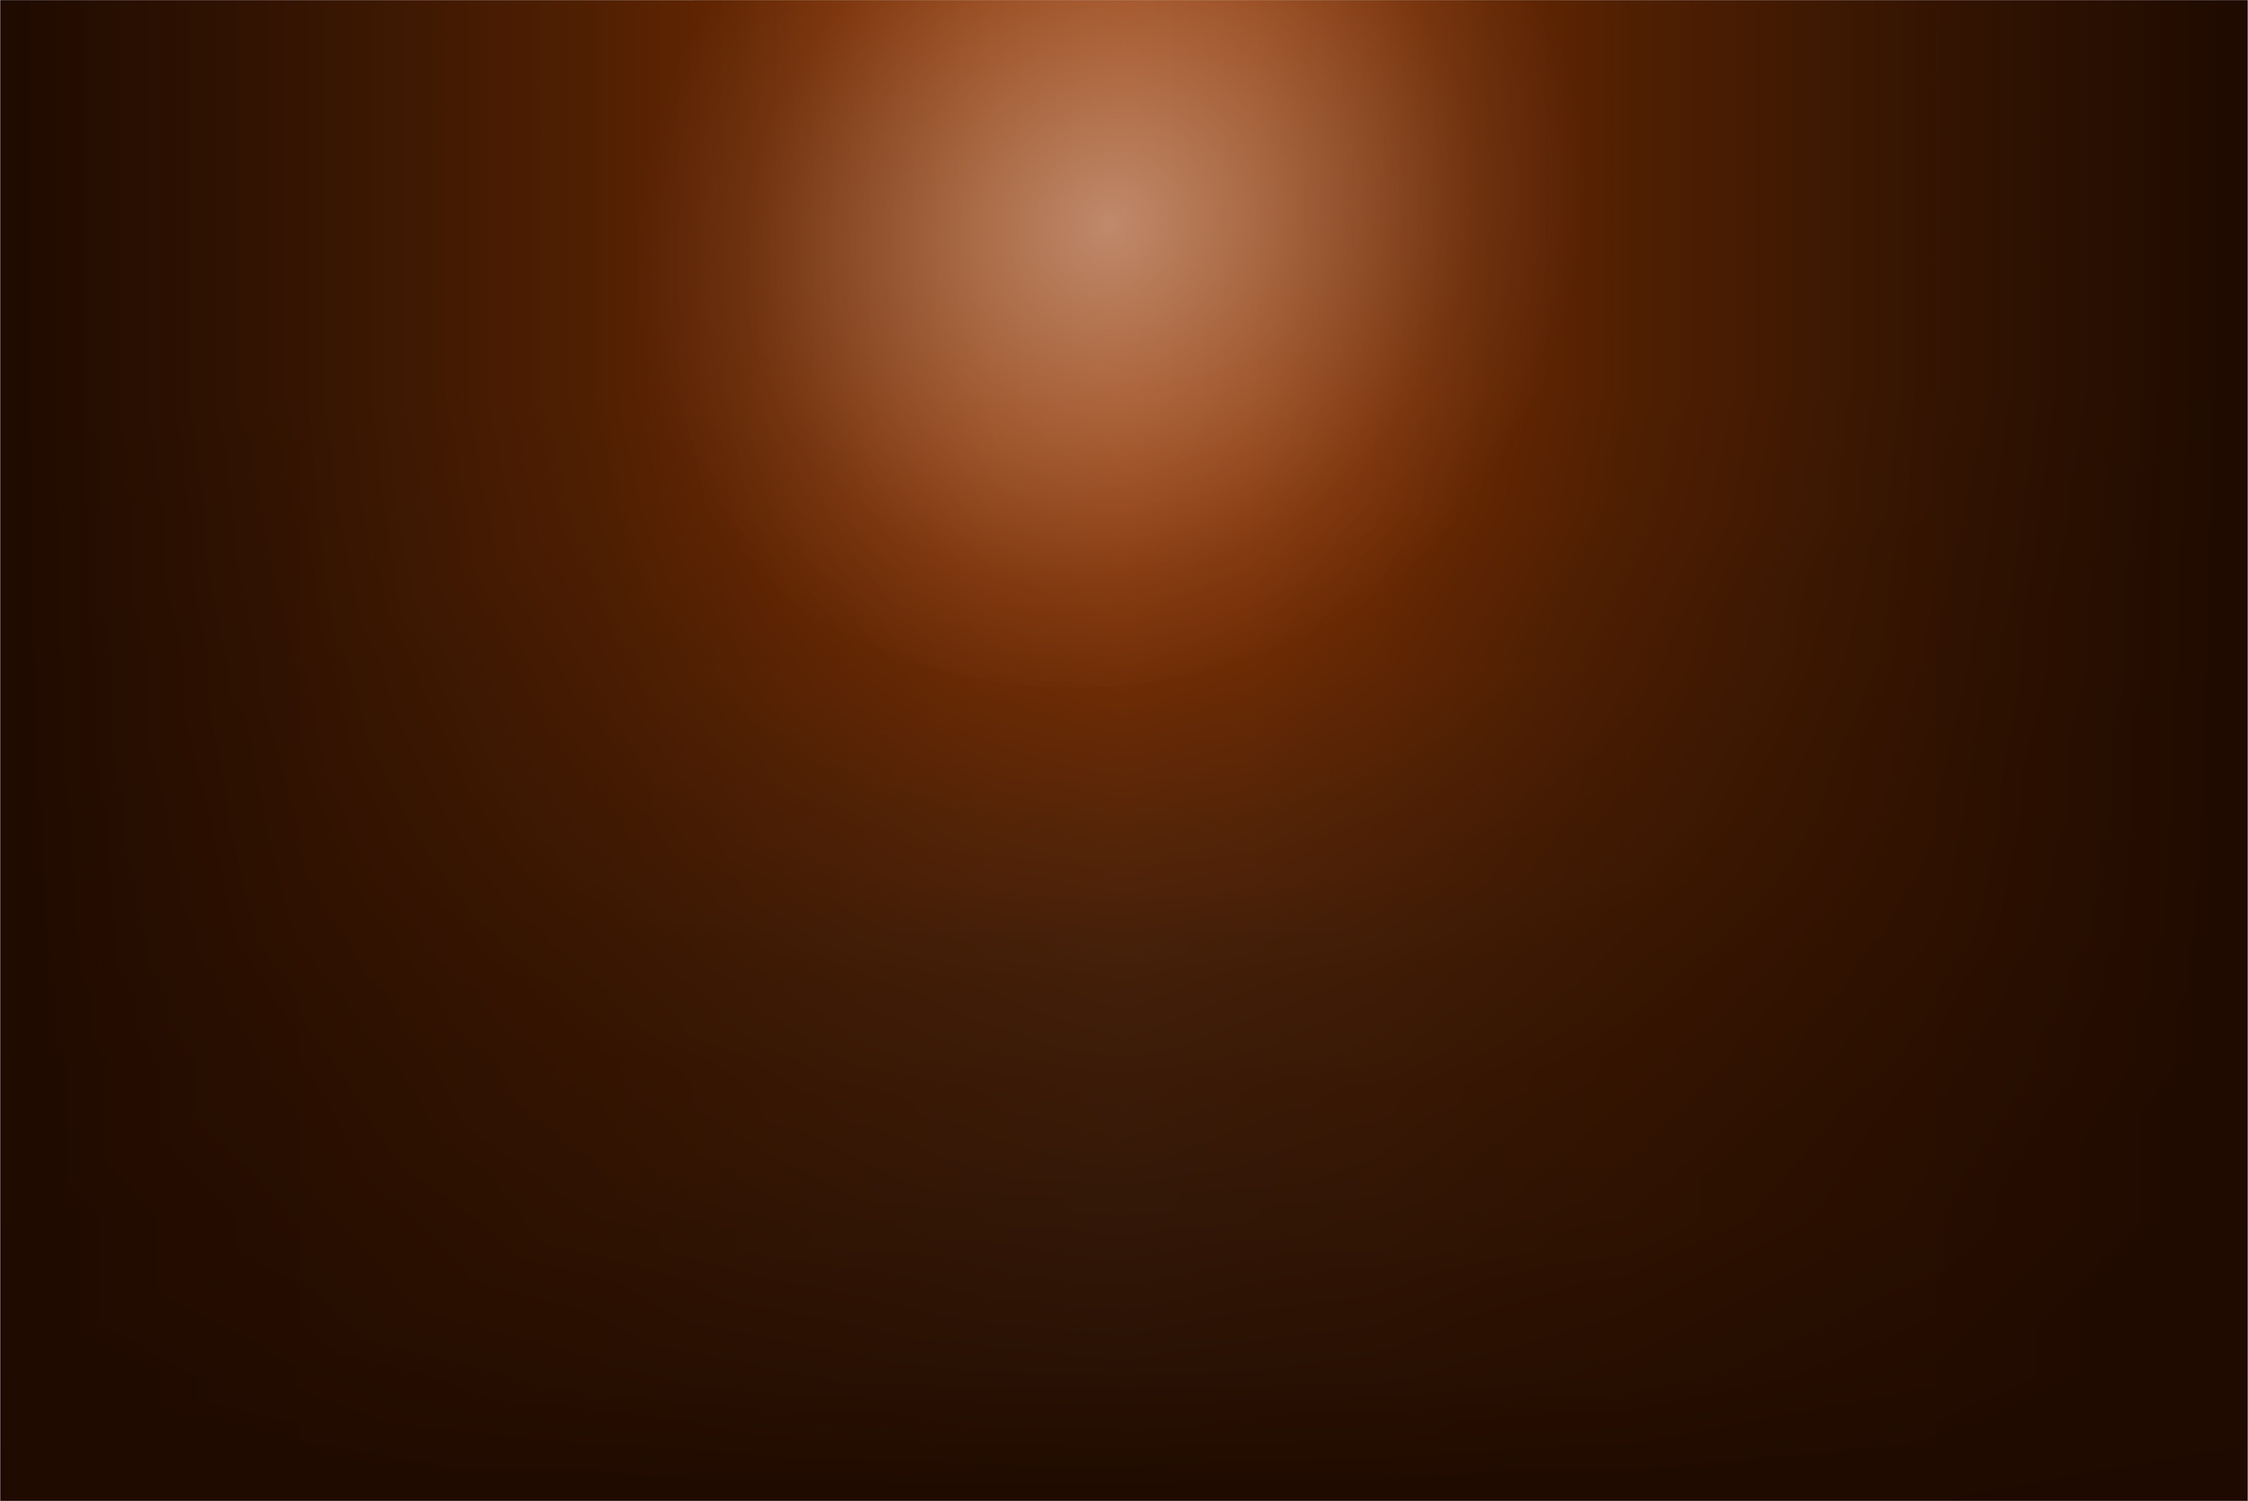 Glowing Light in Dark Brown Gradient Background